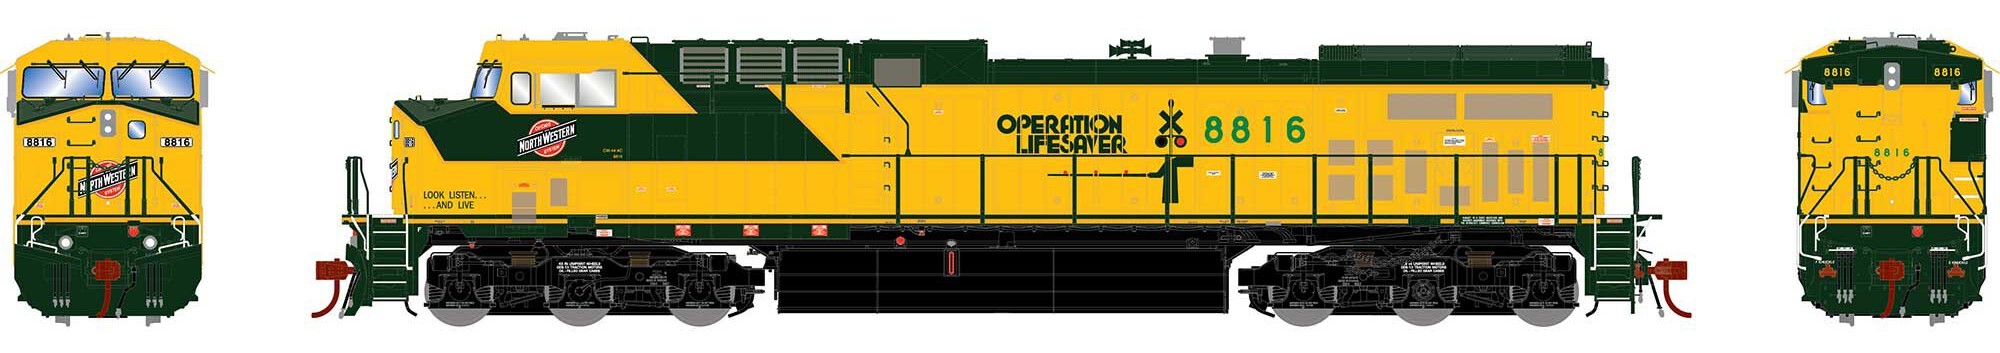 Athearn Genesis 2.0 HO ATHG31648 DCC/Tsunami 2 Sound Equipped GE AC4400CW Locomotive Chicago & Northwestern 'Operation Lifesaver' CNW #8816